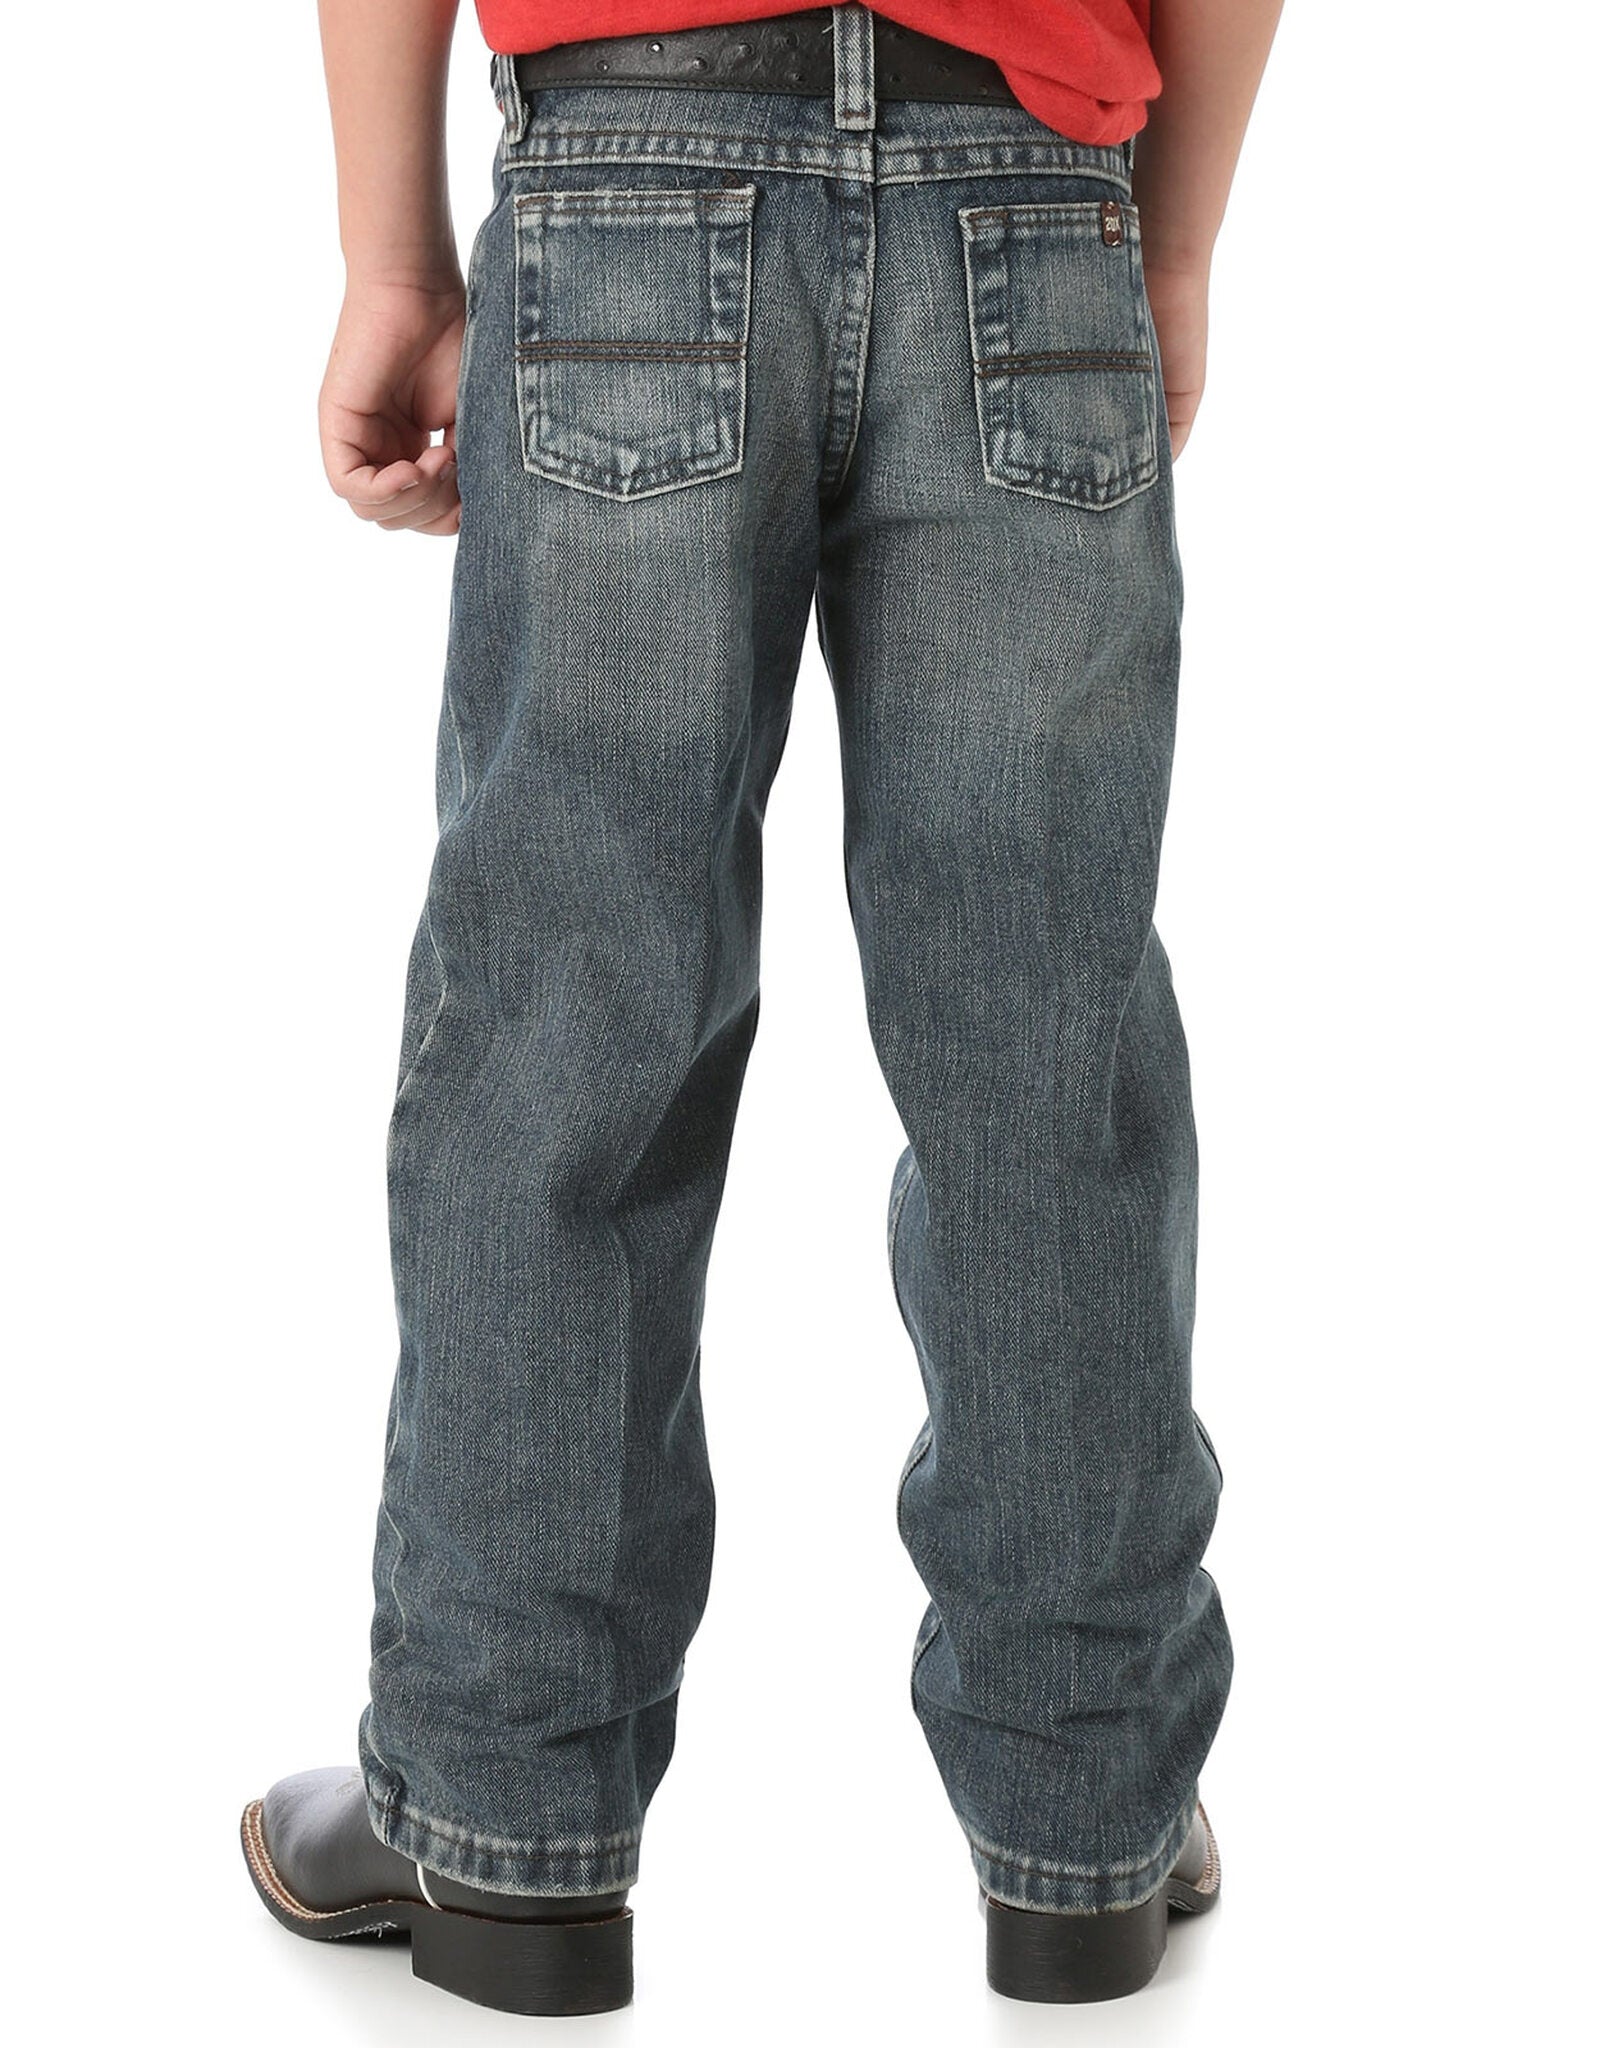 Wrangler 33 Extreme Relaxed Jeans - 33BWXVM – BJ's Western Store